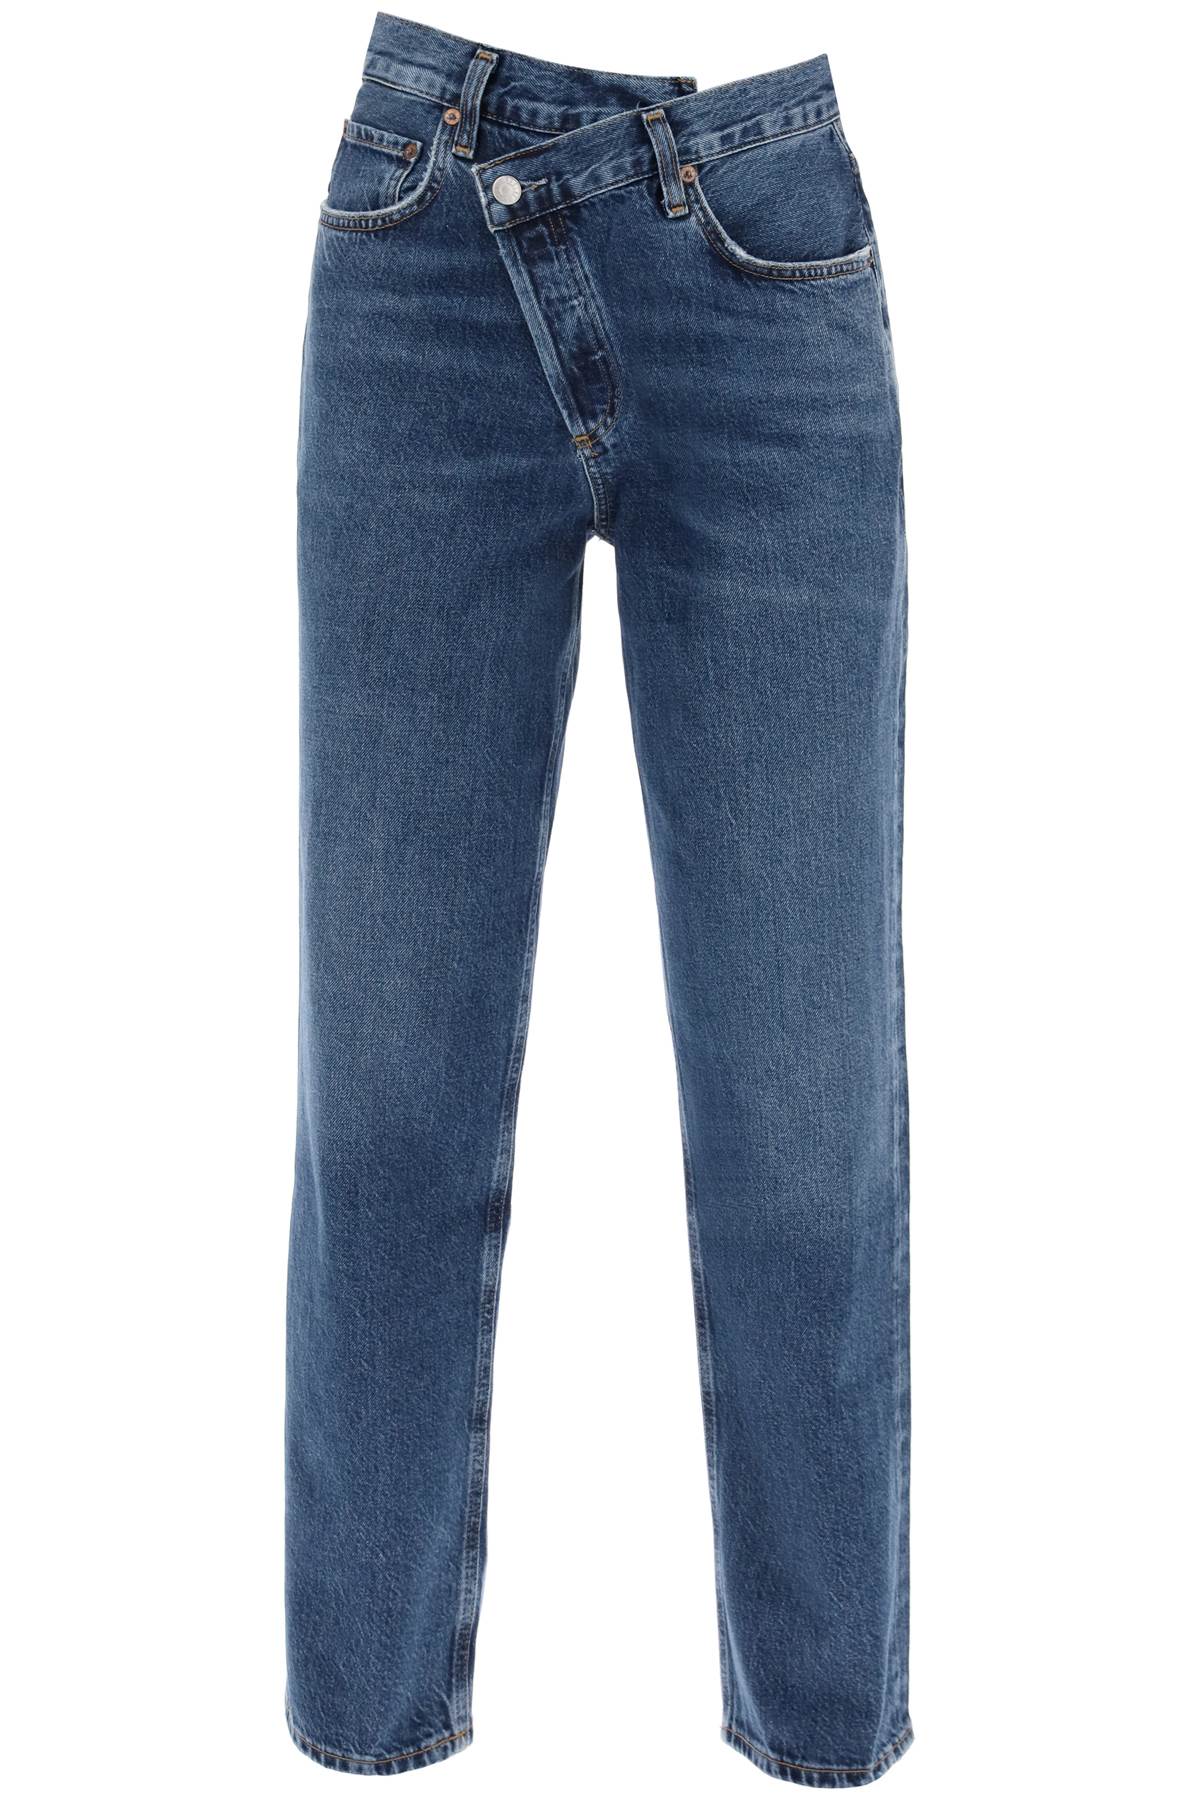 Agolde criss cross jeans-0